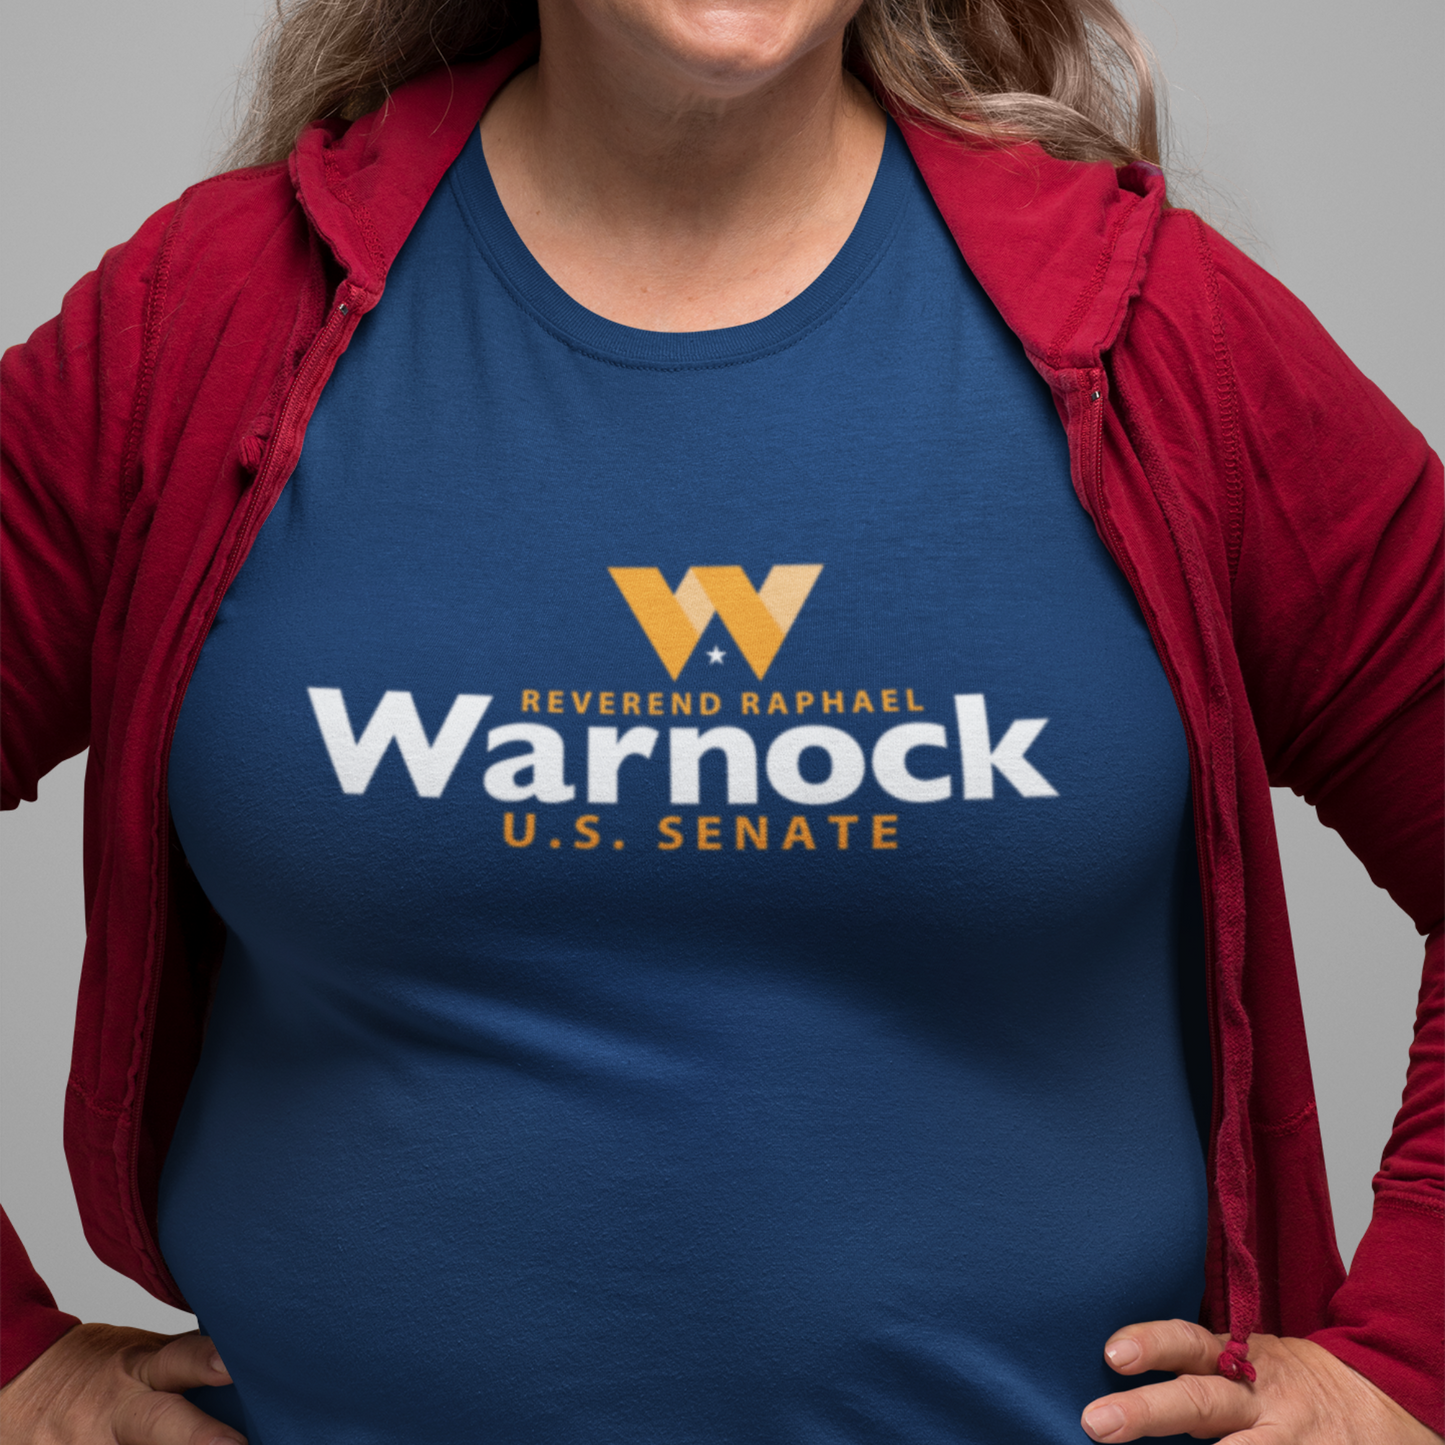 Warnock for Georgia Logo T-Shirt